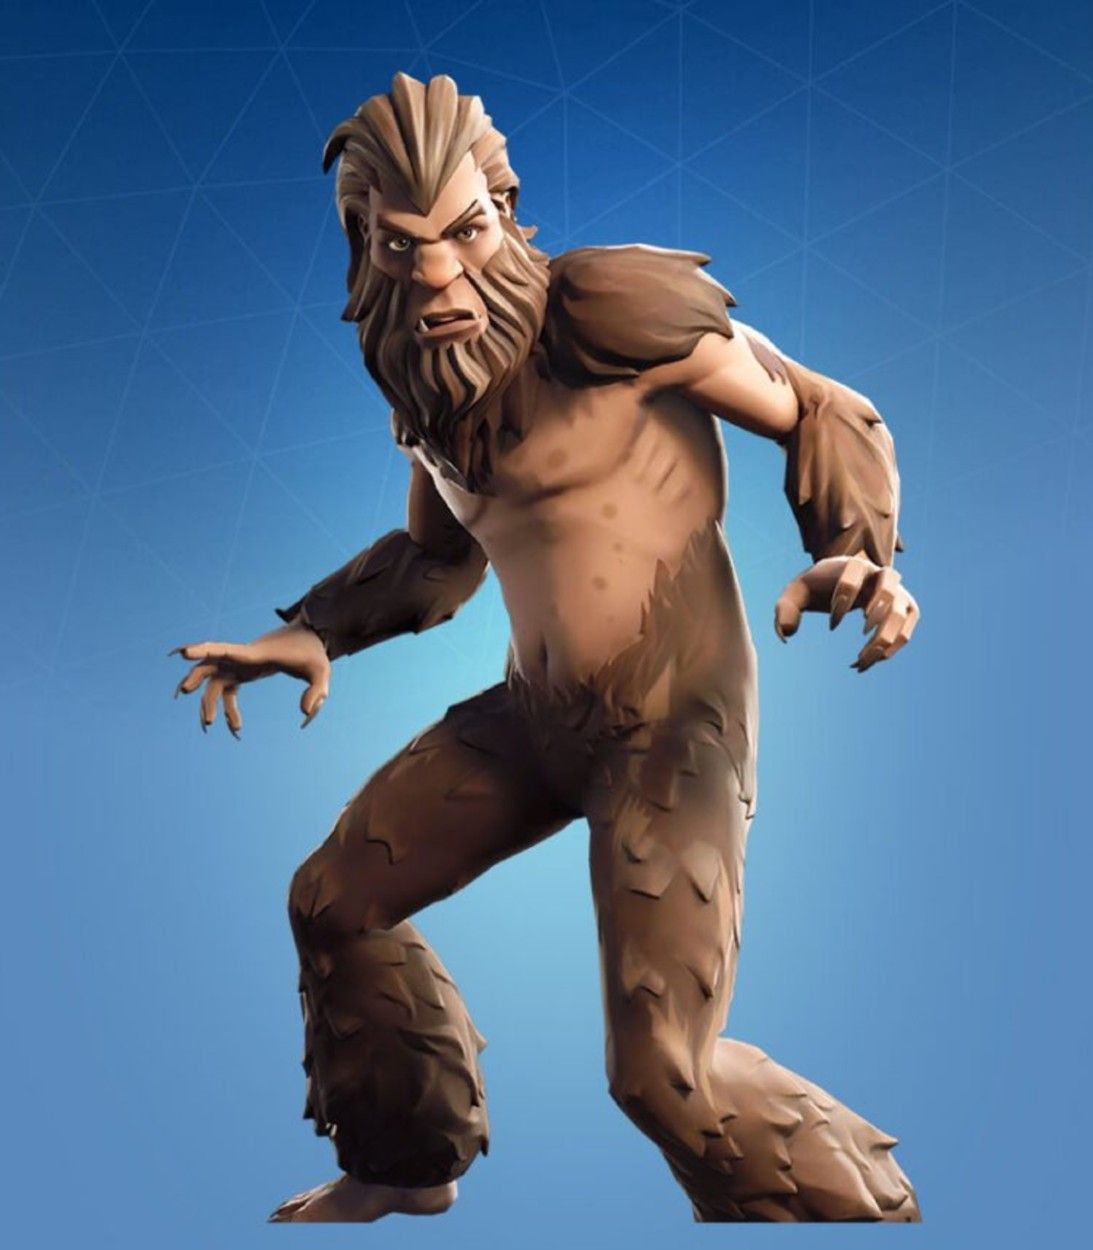 Bigfoot is an NPC bounty hunter in Fortnite Season 5